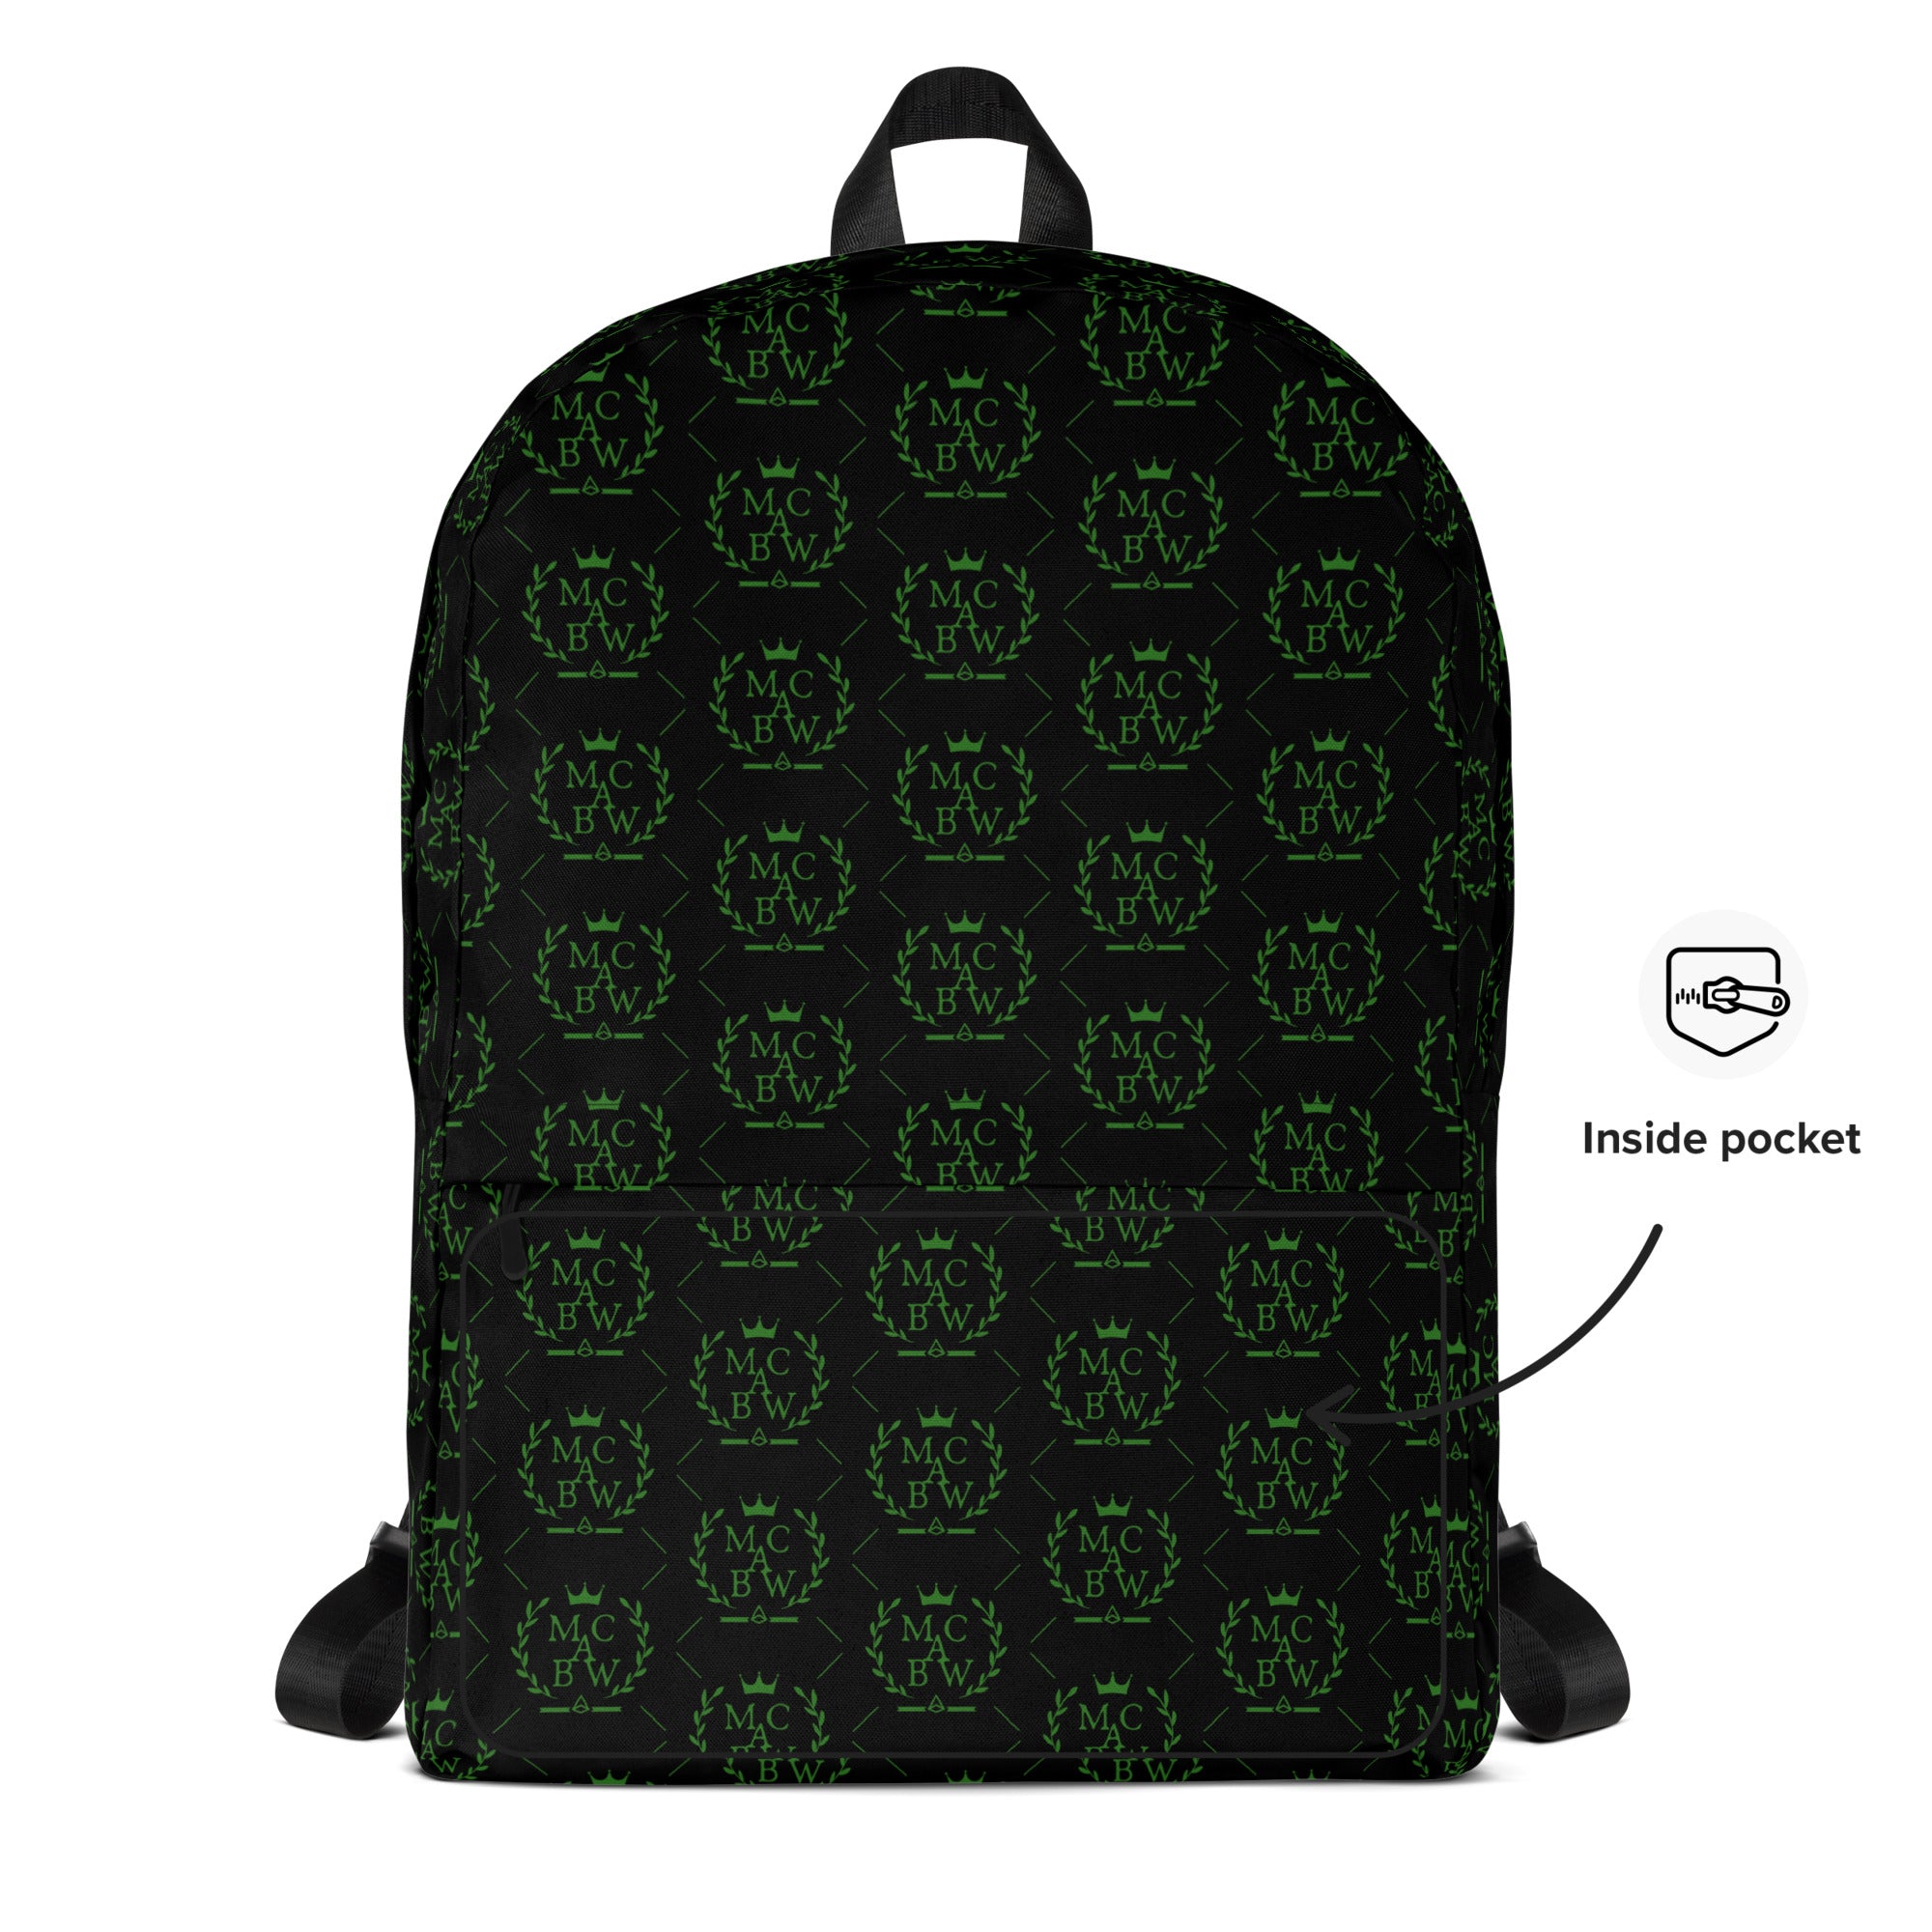 Black/Green Backpack